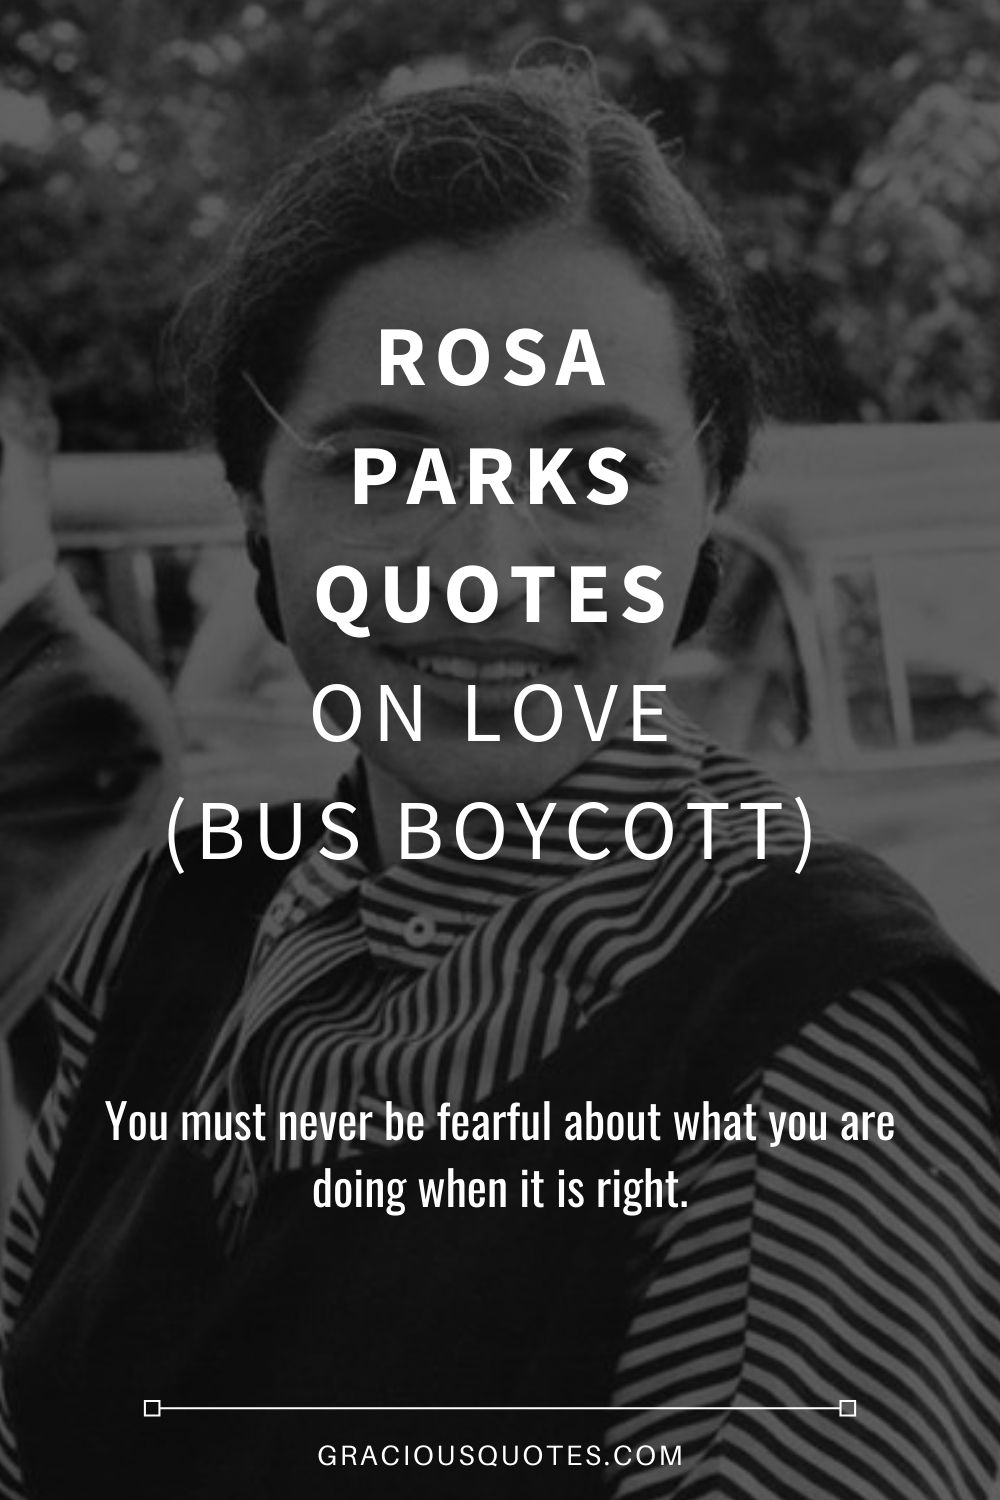 Rosa Parks Quotes on Love (BUS BOYCOTT) - Gracious Quotes